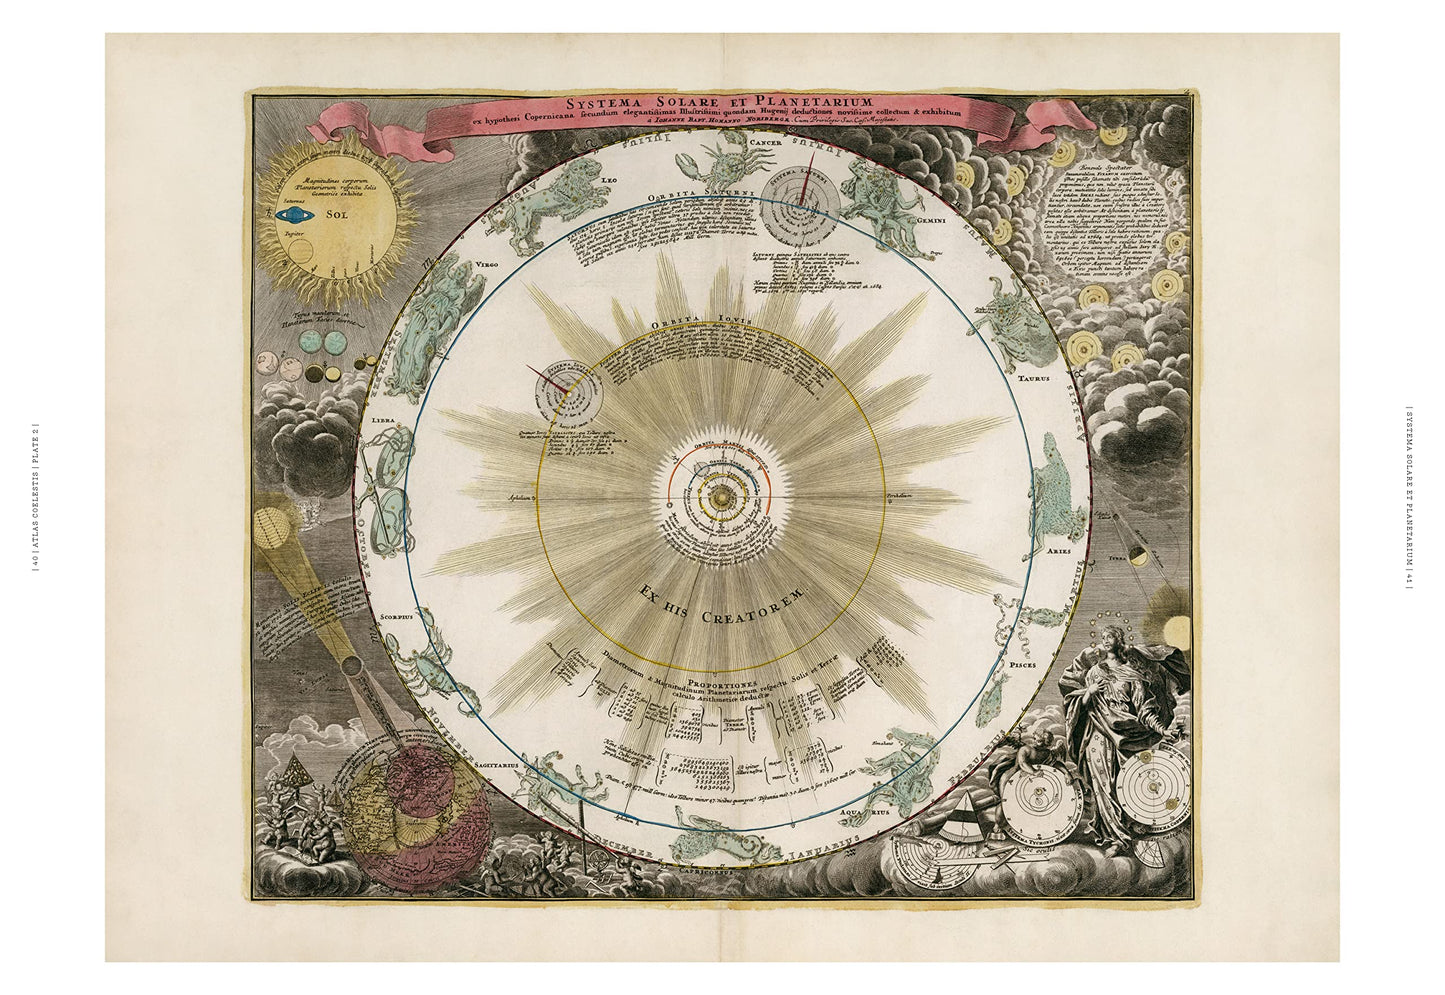 Phaenomena: Doppelmayr's Celestial Atlas